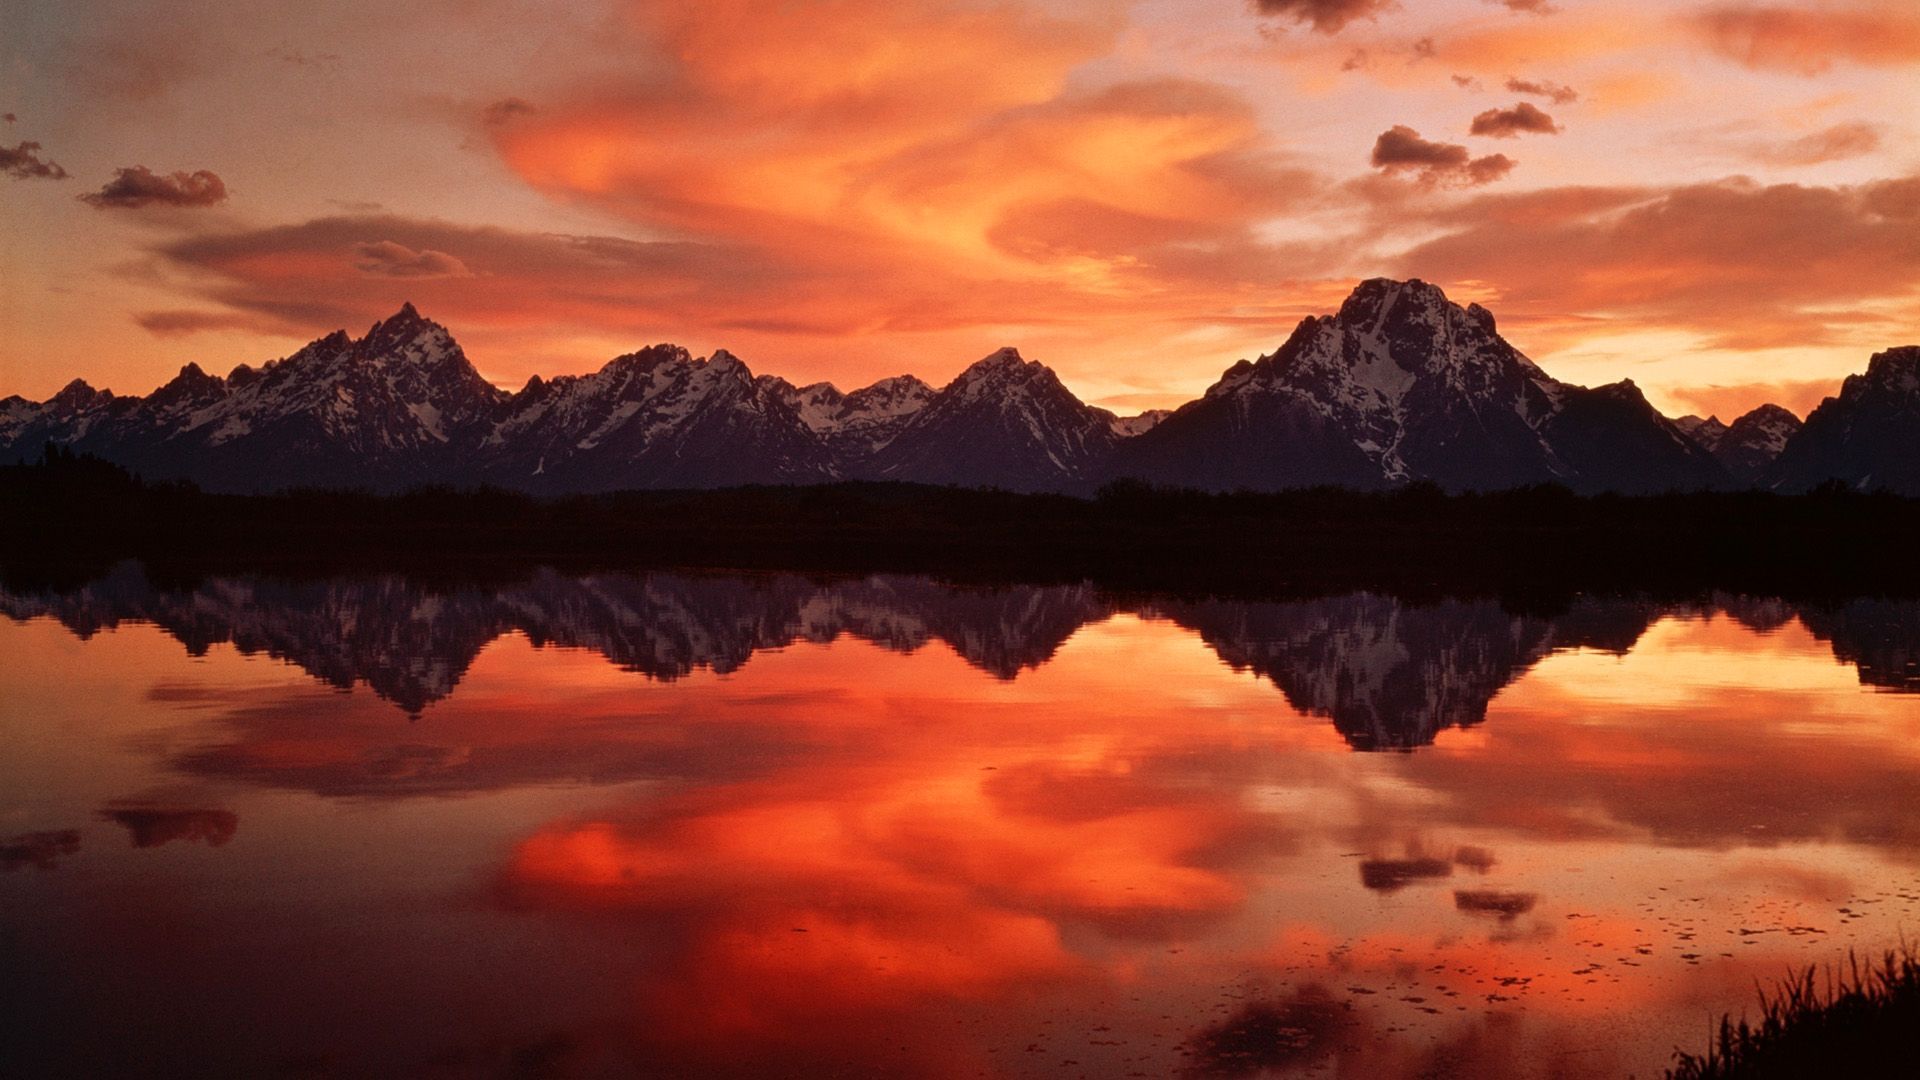 Mountain Sunset Wallpapers - Top Những Hình Ảnh Đẹp